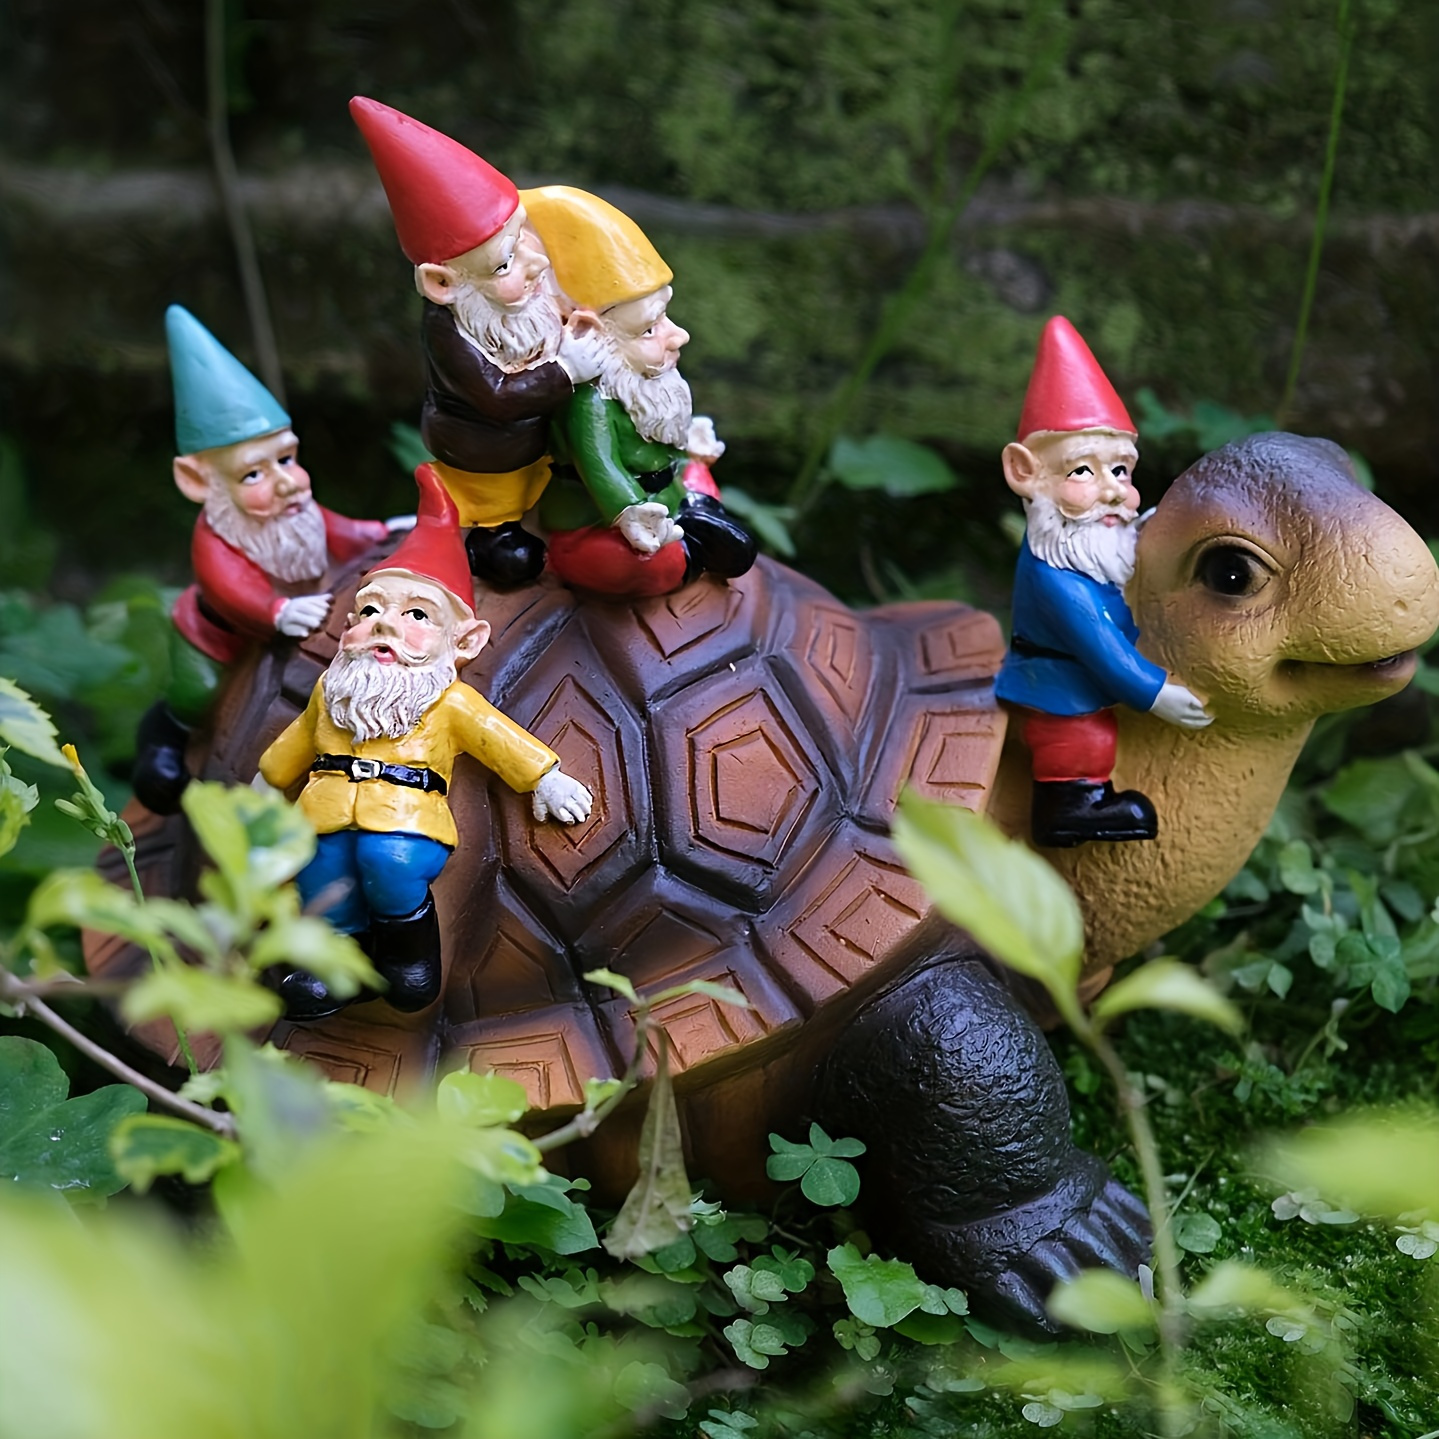 

1pc Turtle Gnome Statue, Outdoor Garden Resin Crafts, Fairy Garden Art Ornaments, Landscaping Diy Garden Sculptures, For Yard Lawn Balcony Home Decor, Housewarming Gift